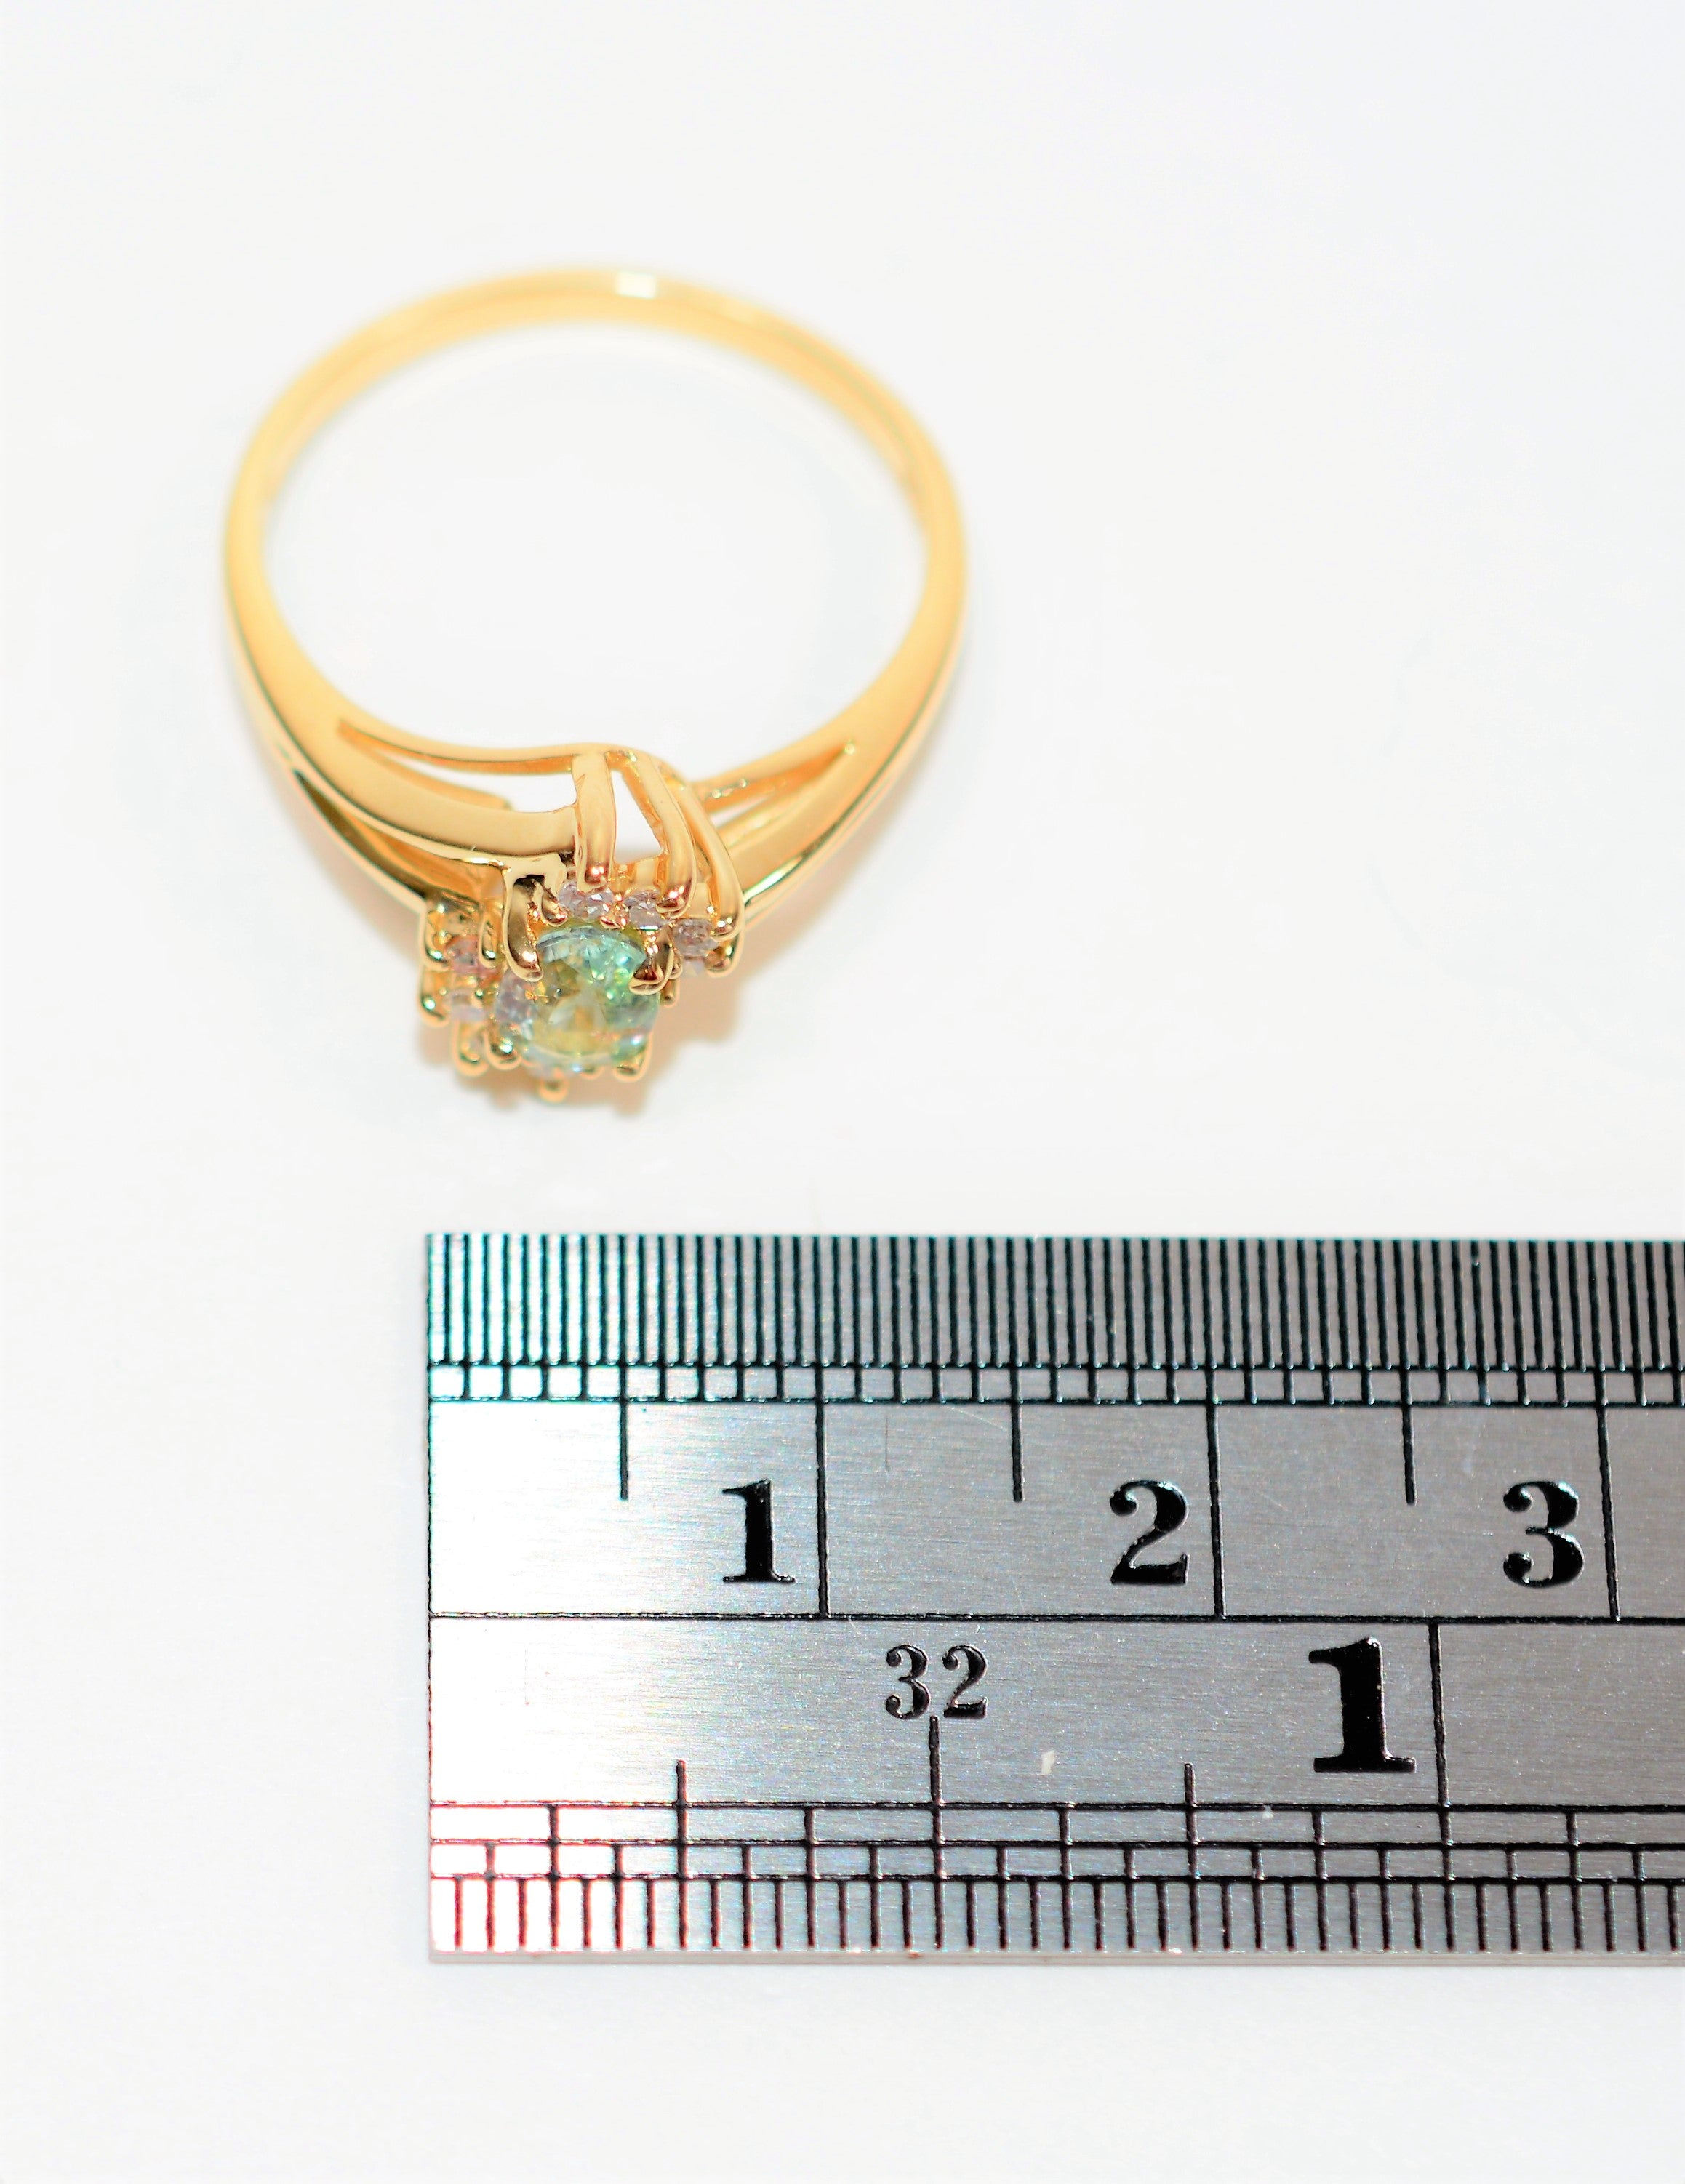 Natural Paraiba Tourmaline & Diamond Ring 14K Solid Gold .62tcw Cluster Fine Gemstone Ladies Ring Women’s Fine Jewelry Estate Jewellery